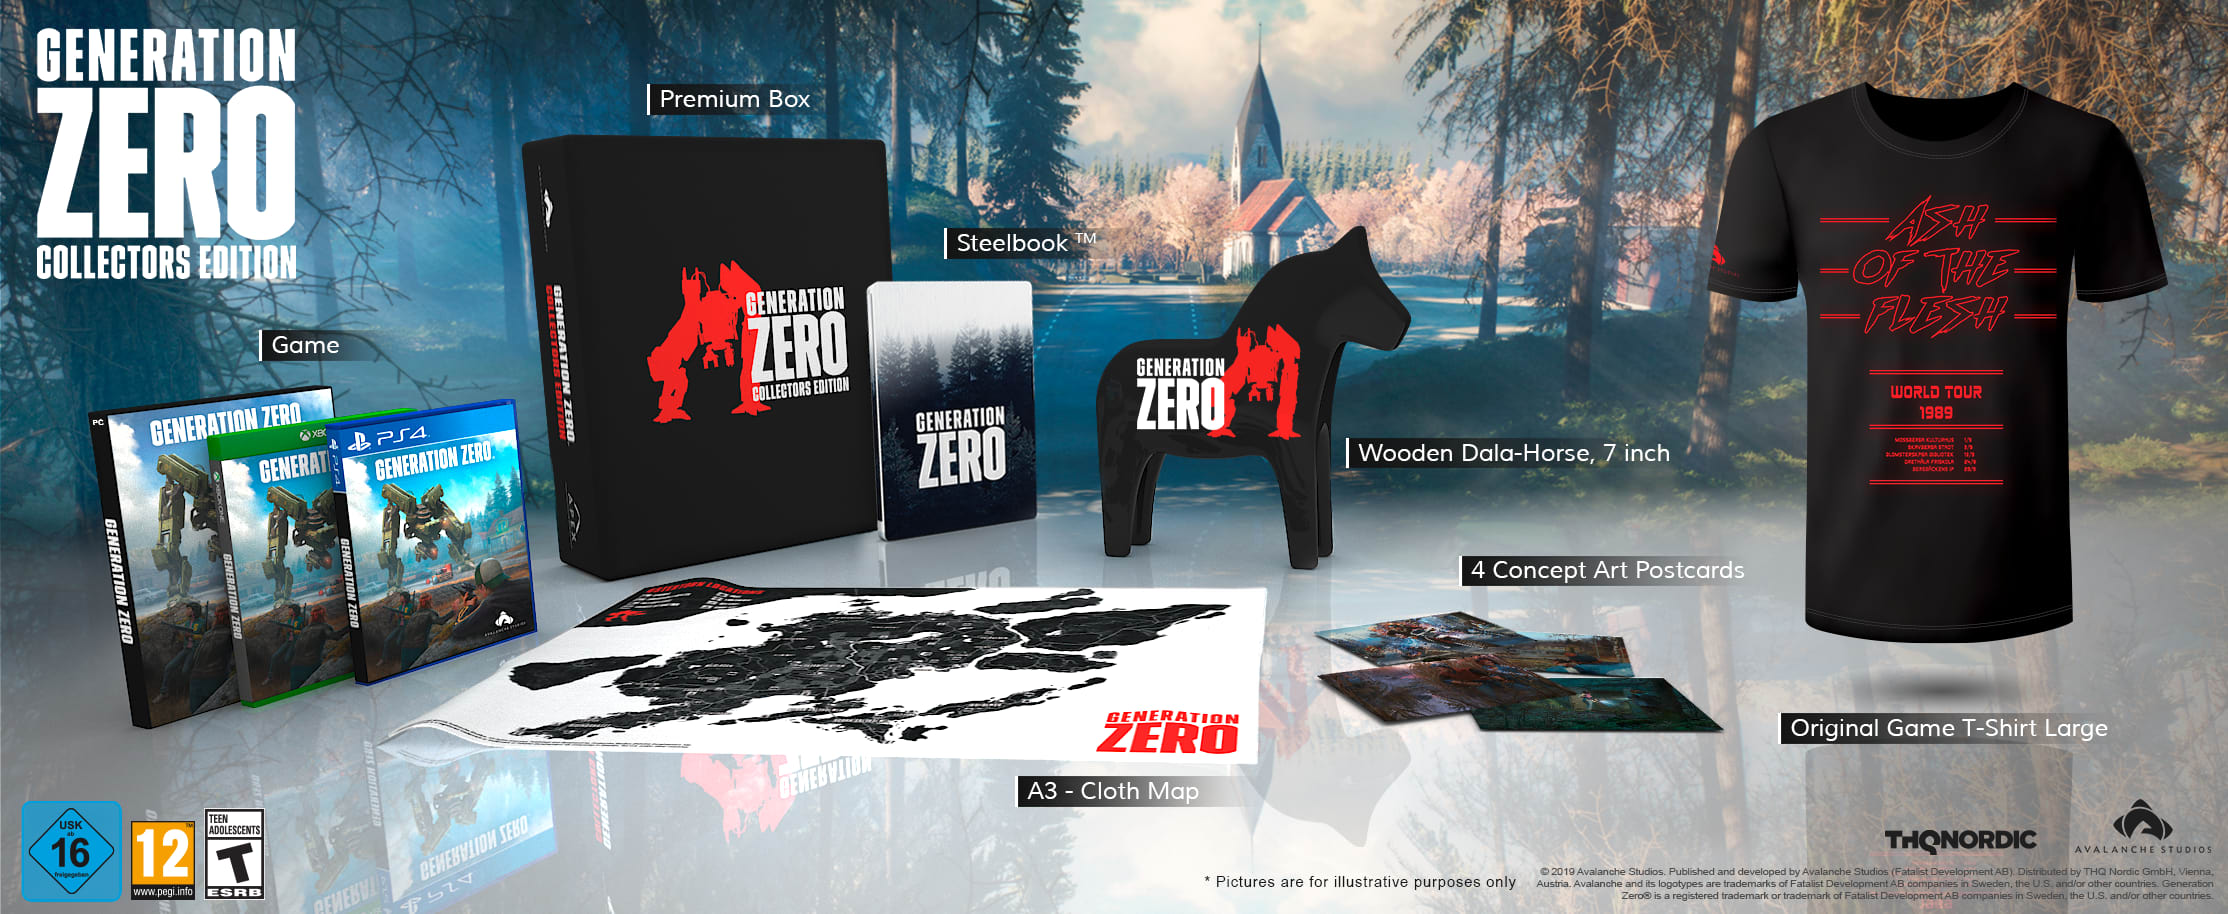 Generation Zero - Collector's Edition (PS4), THQ Nordic